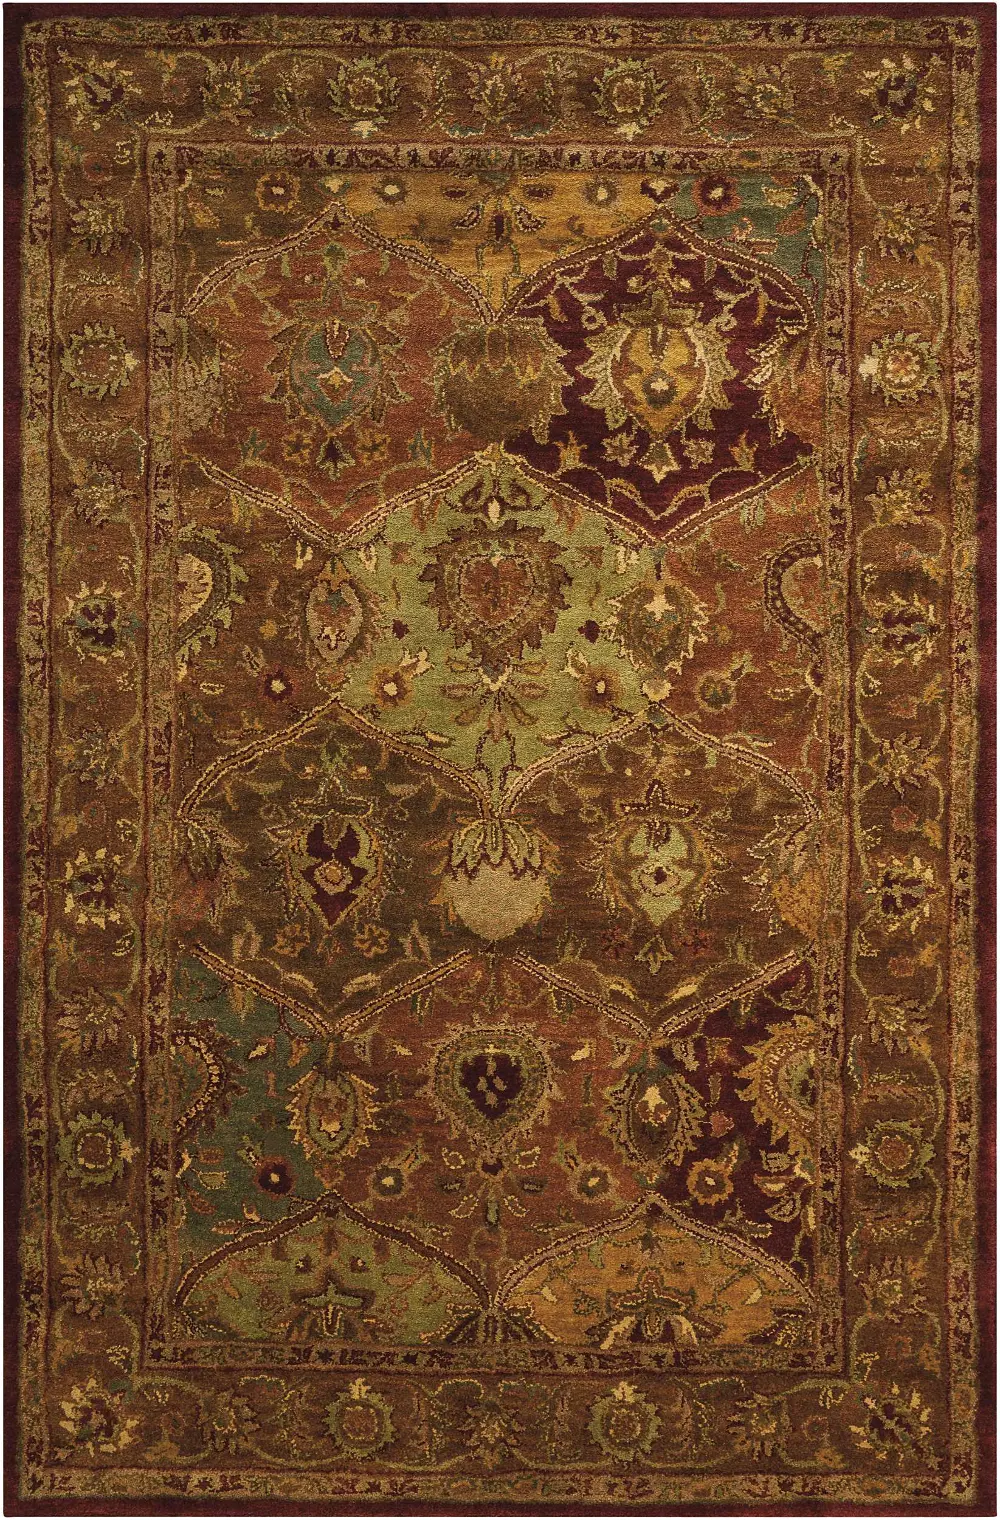 6 x 9 Medium Beige Persian-Style Area Rug - Jaipur-1